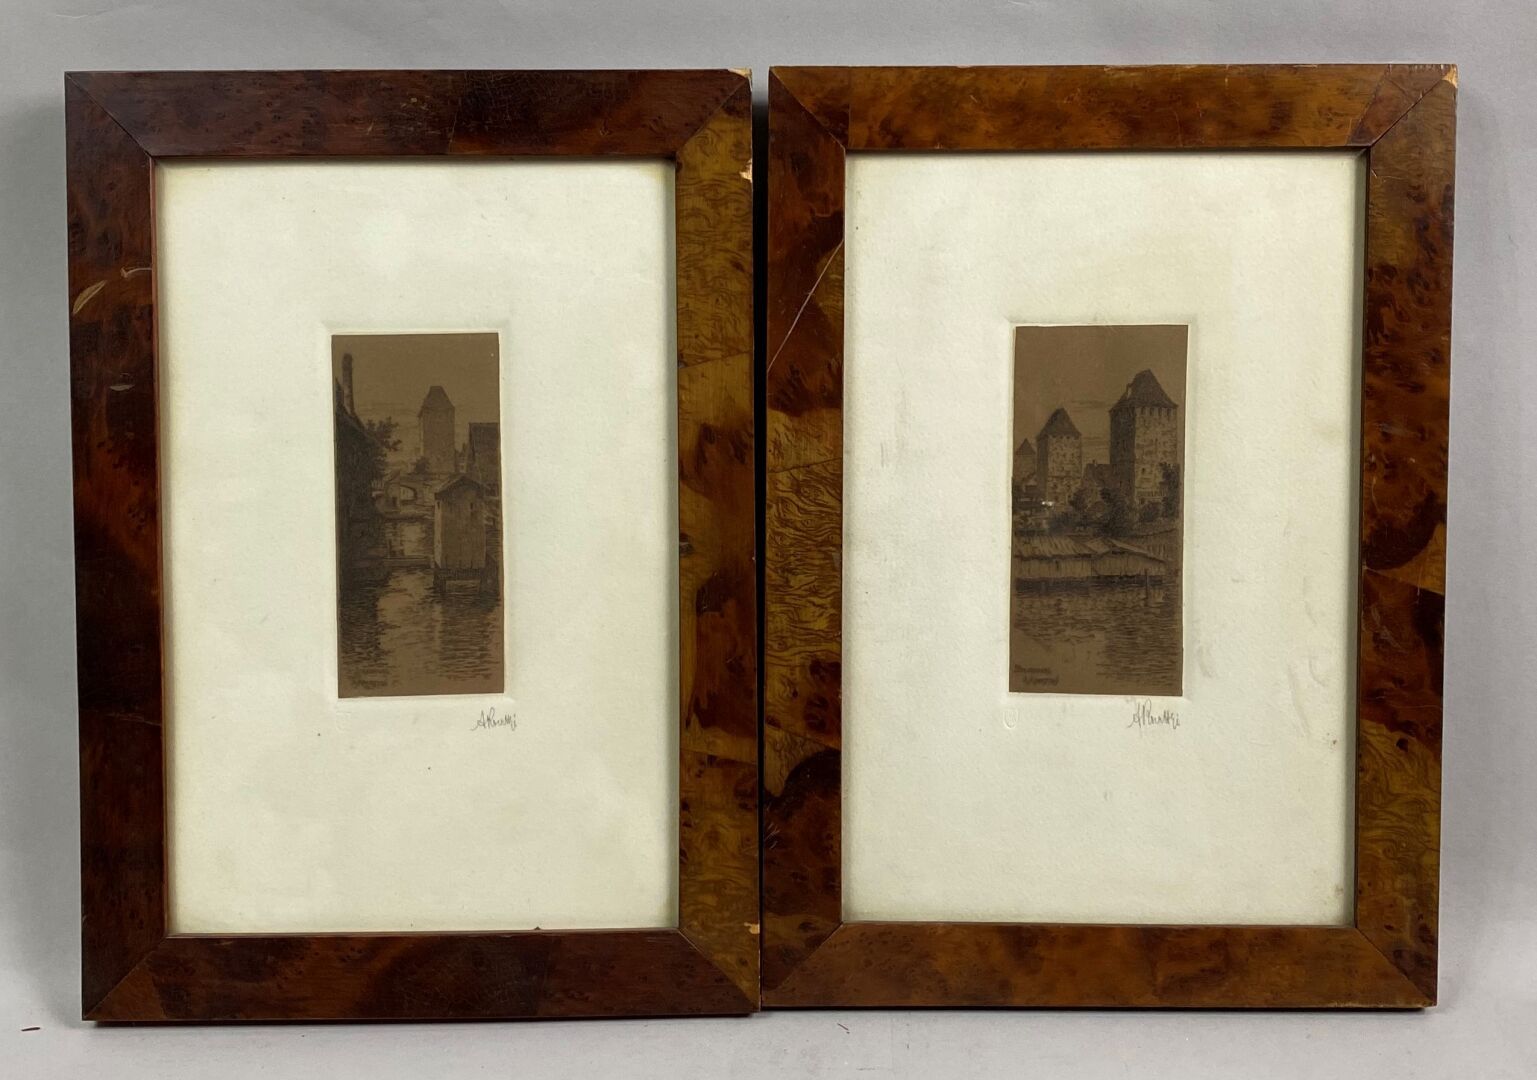 Null 柯特格-艾伯特 (1861-1940)

斯特拉斯堡

棕色纸上的两幅小型蚀刻画

右下方有签名

12,5 x 6 cm 正在观看